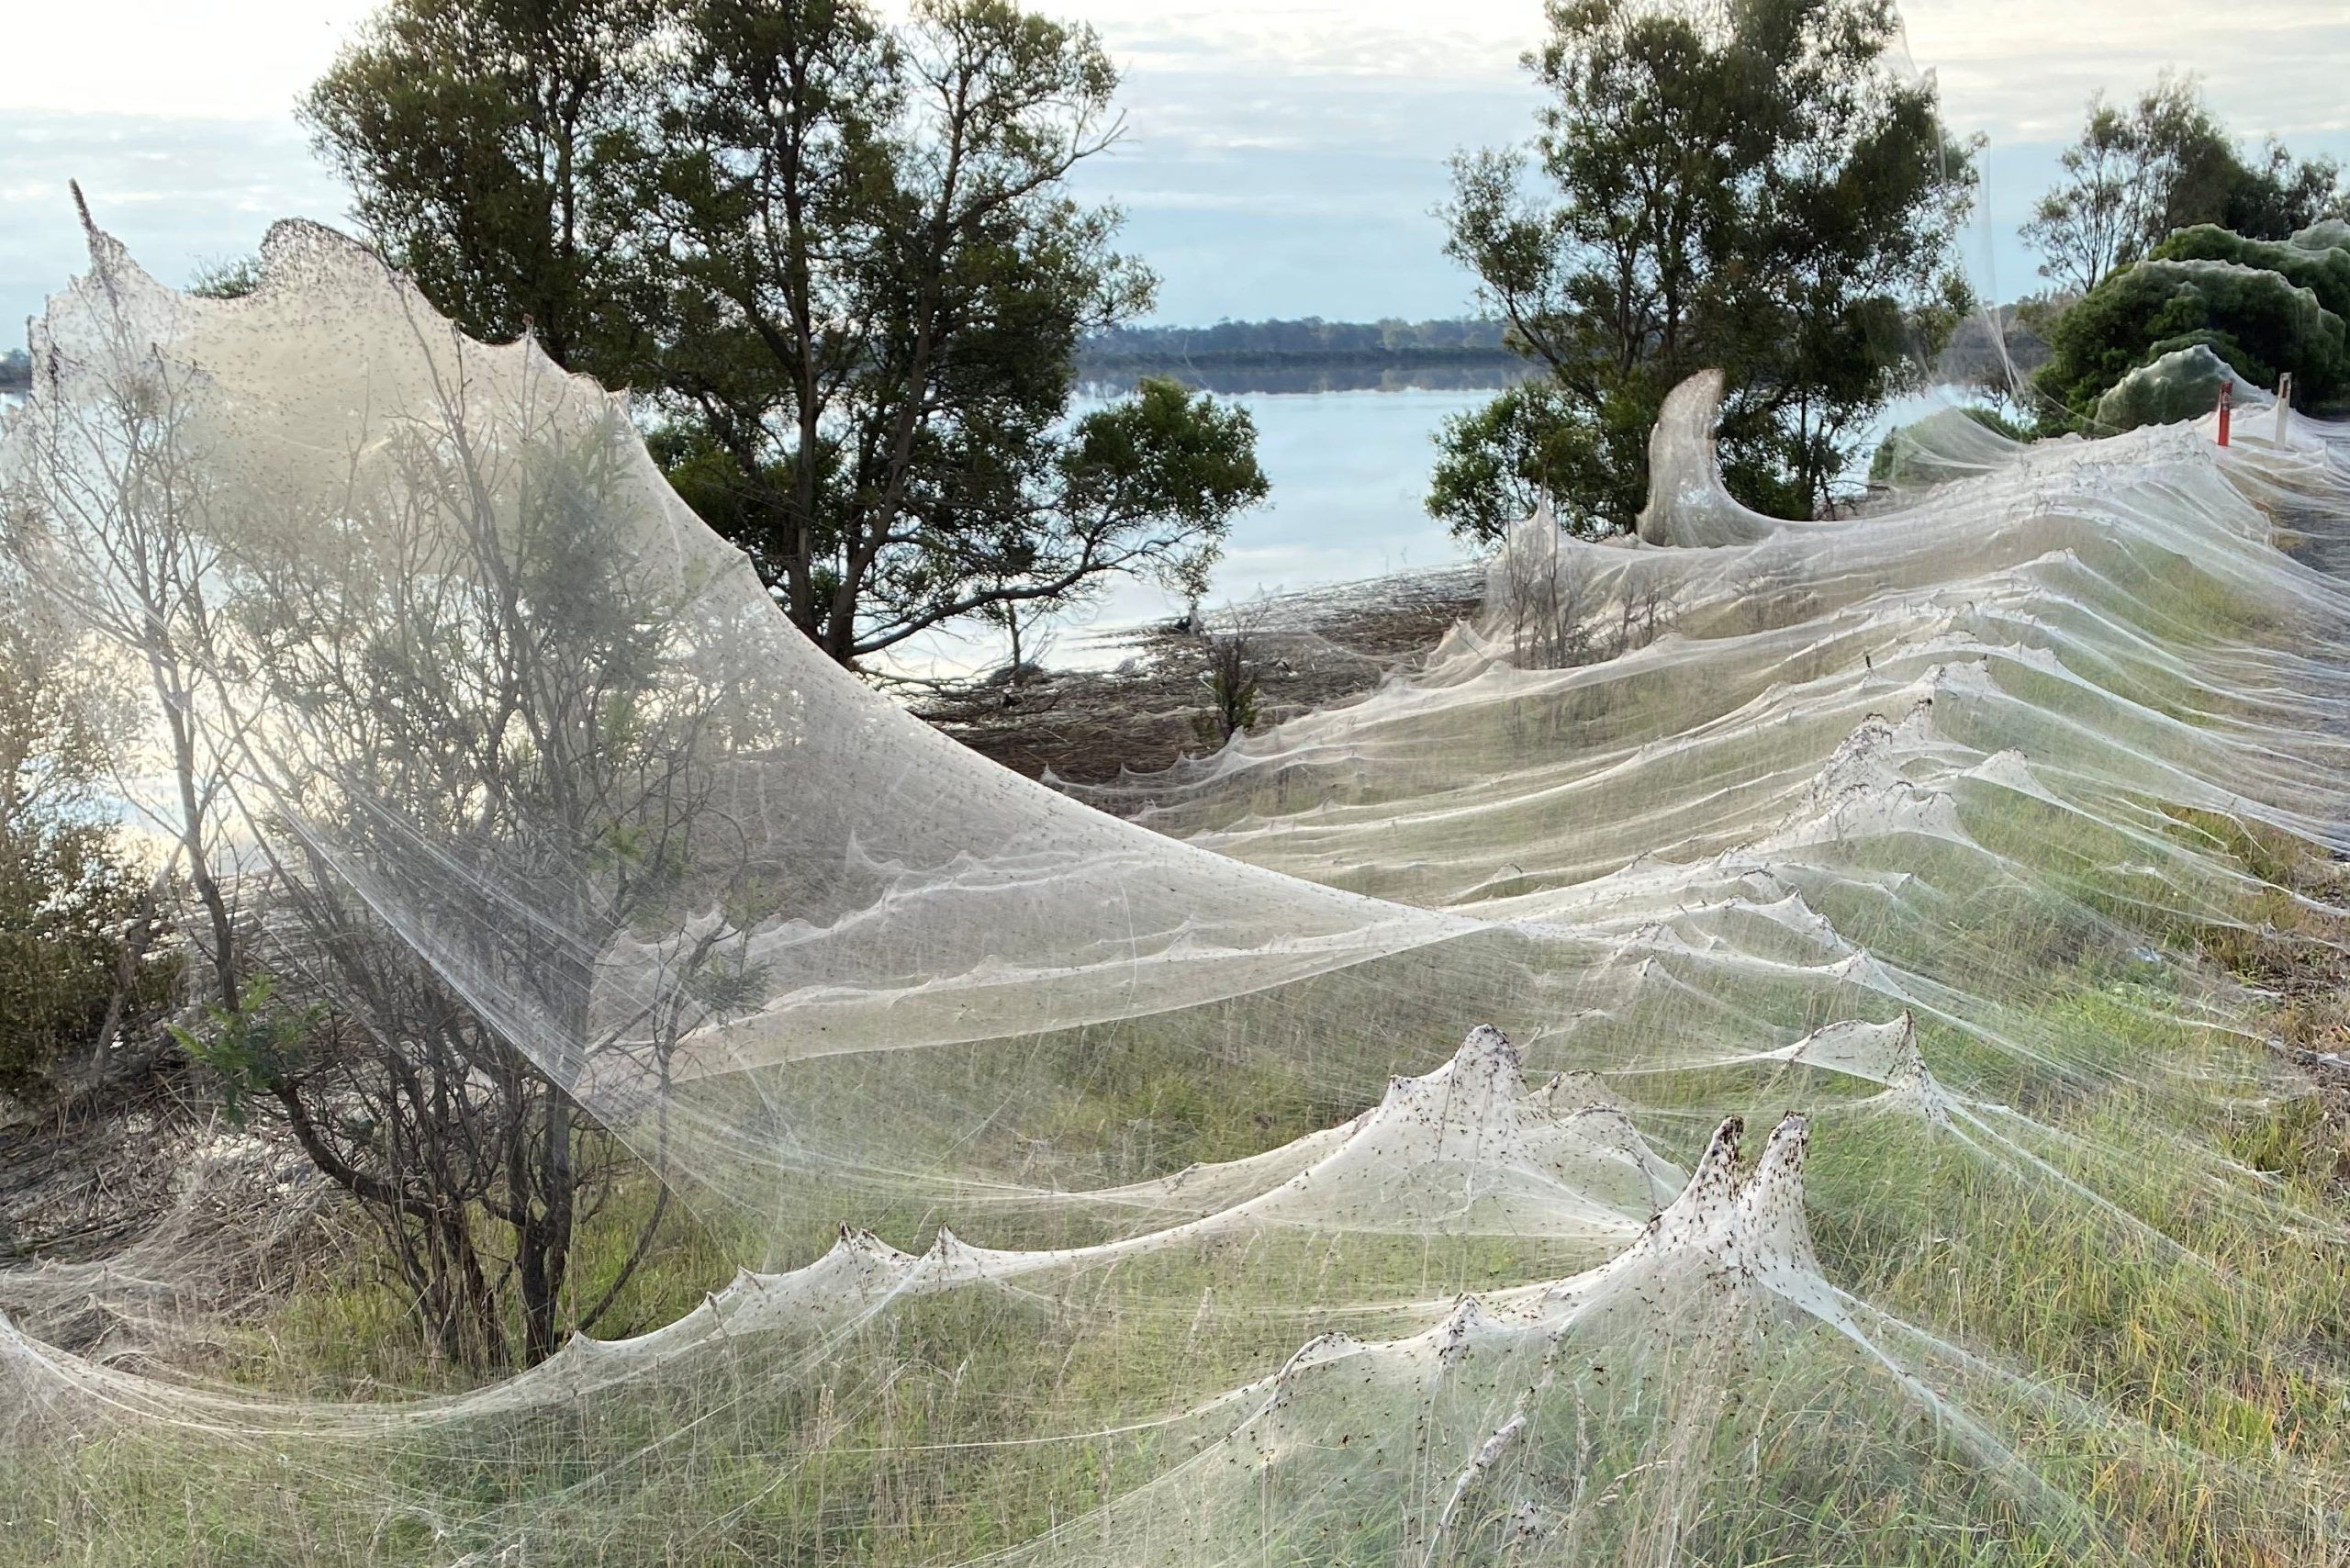 Spider webs cause panic in Australia